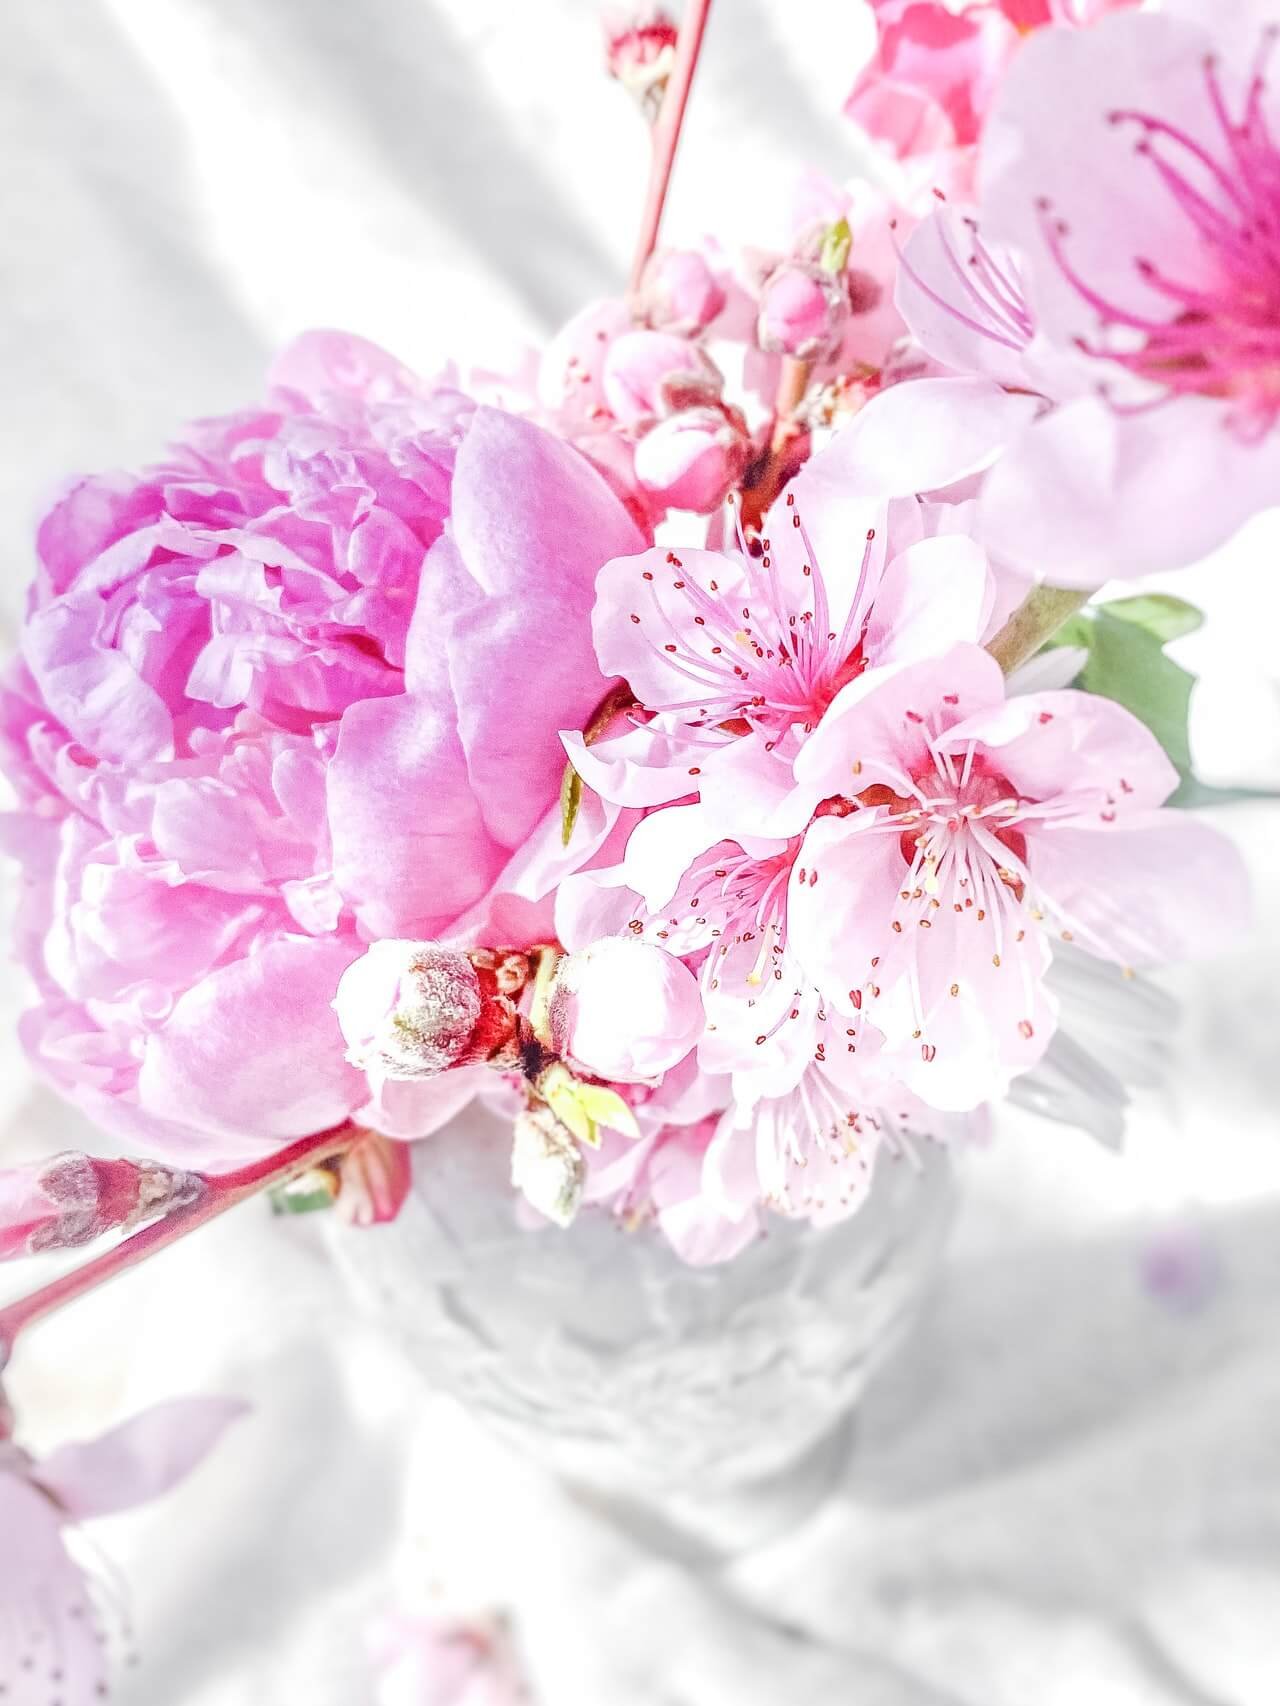 Flowers in Vase During Pregnancy Massage